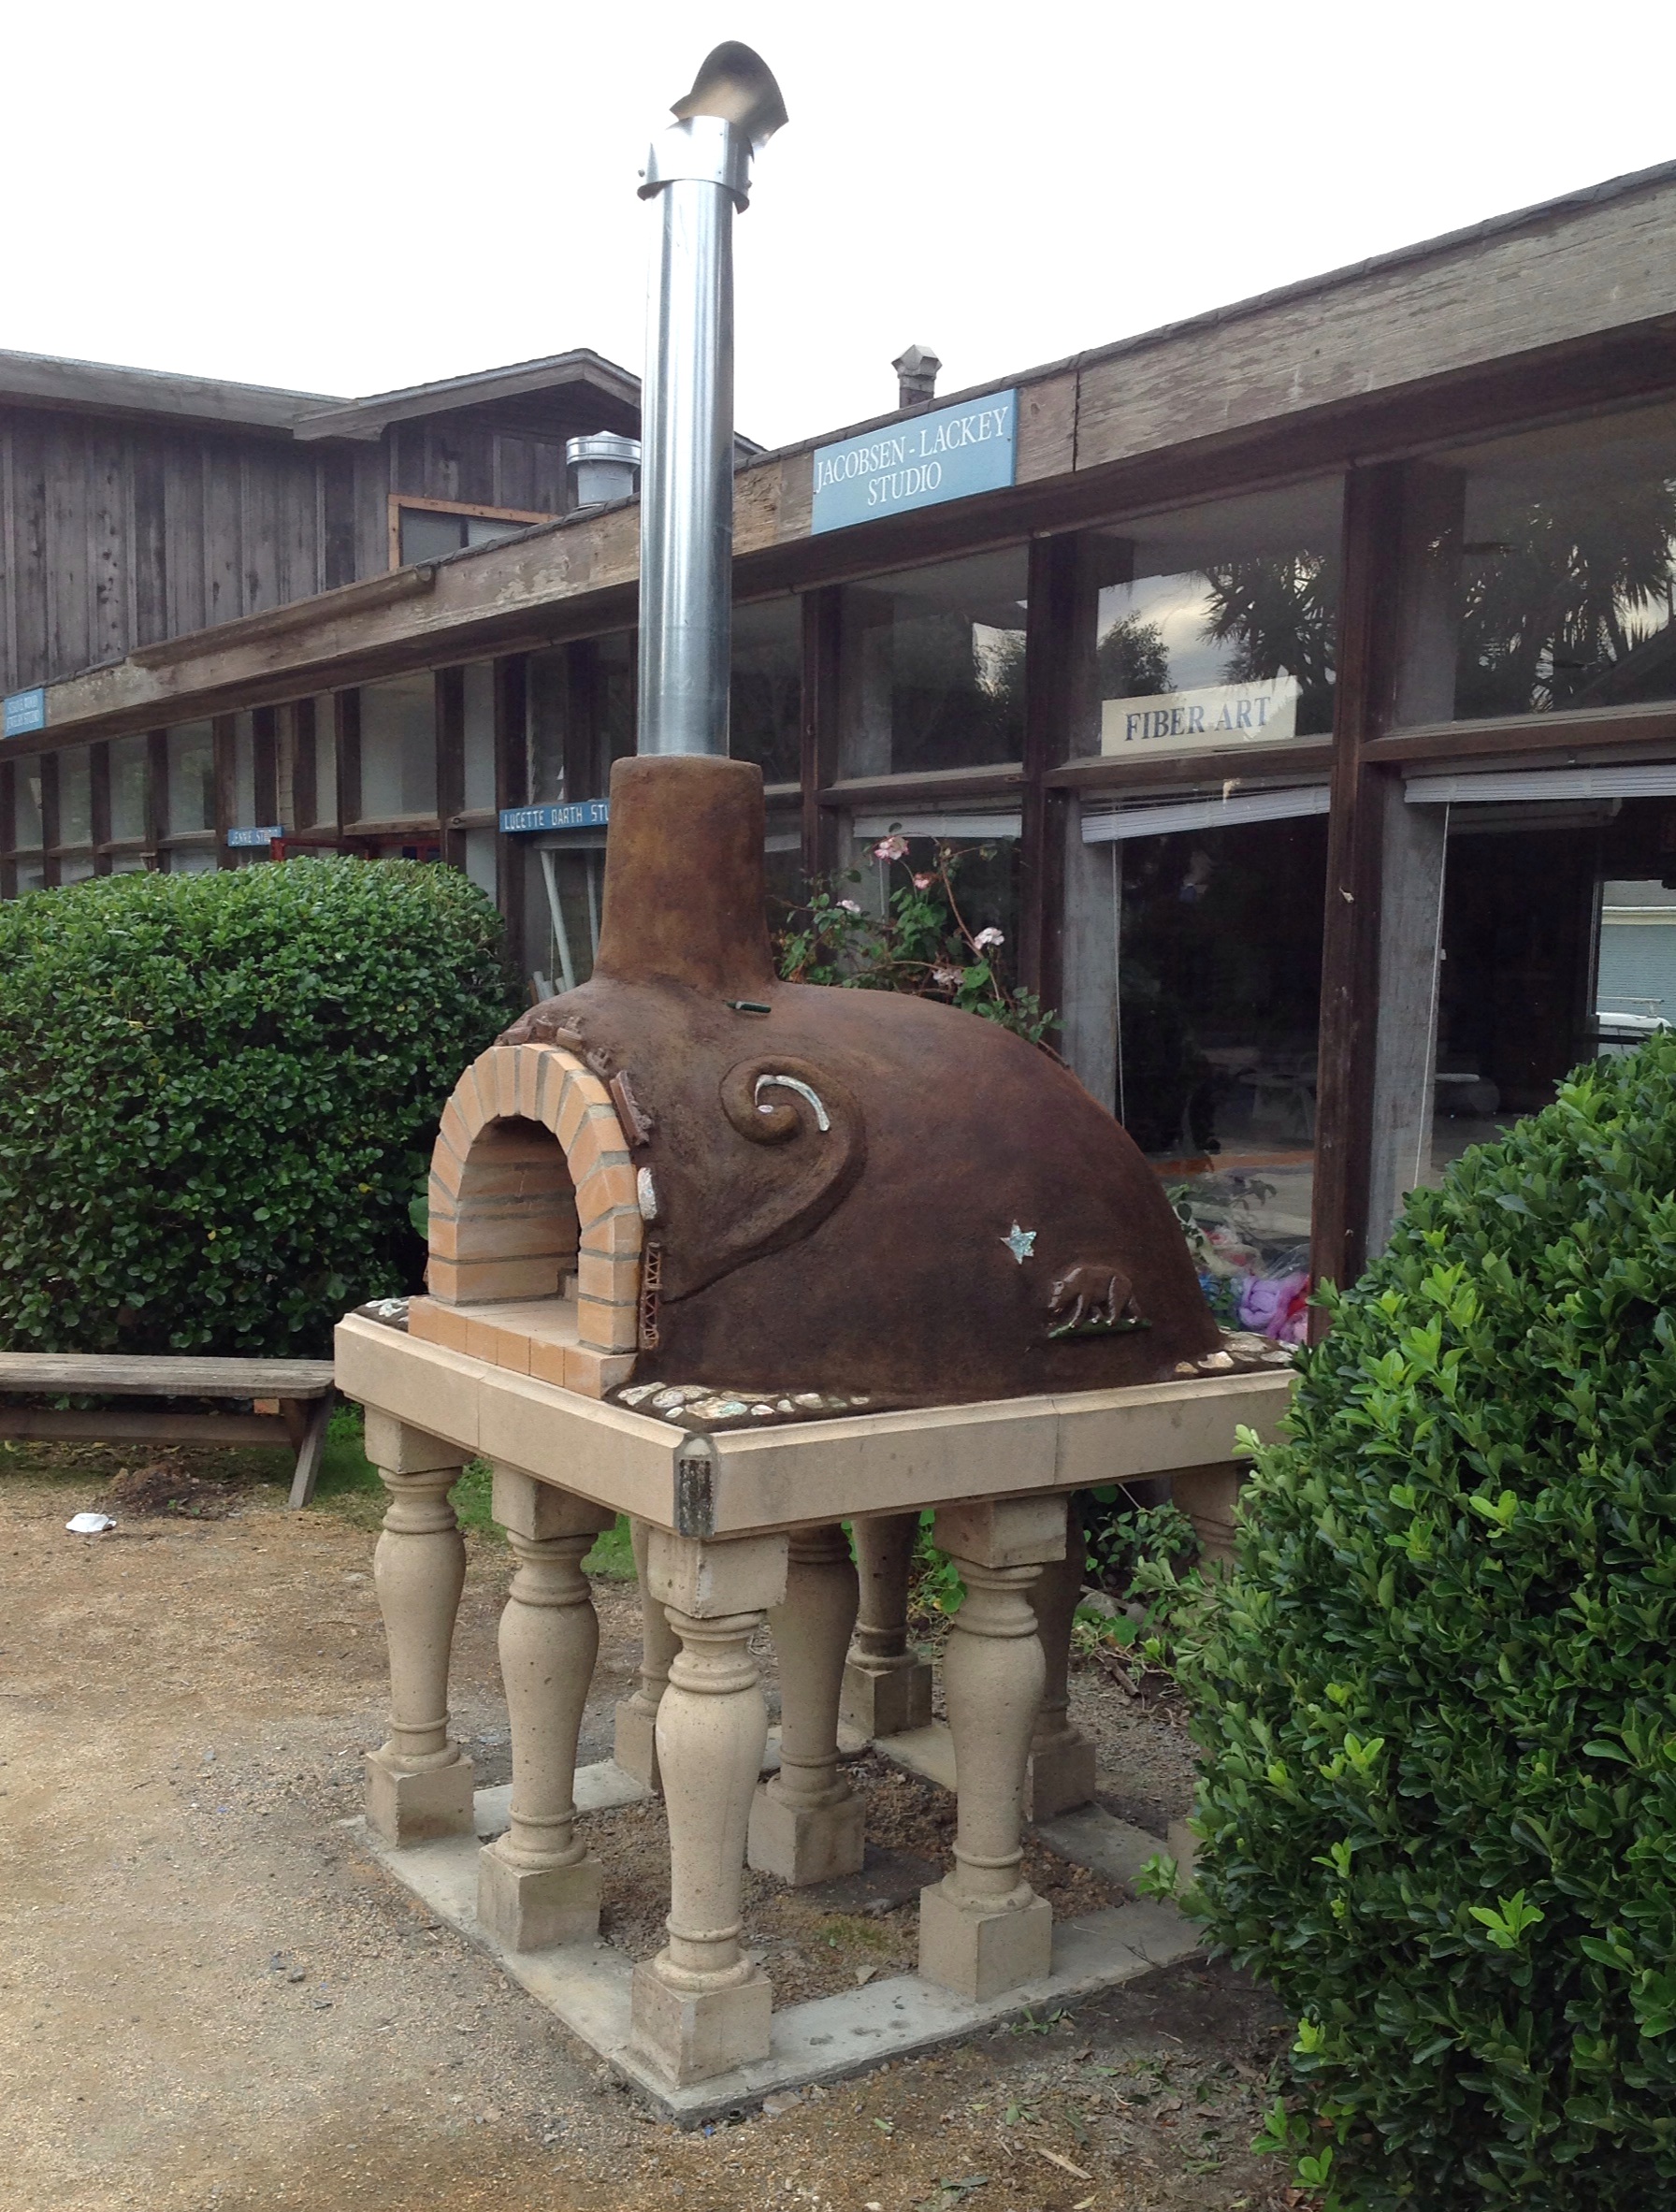  "Abalone Shell Oven" Mendocino Art Center, Mendicino, CA 2015 